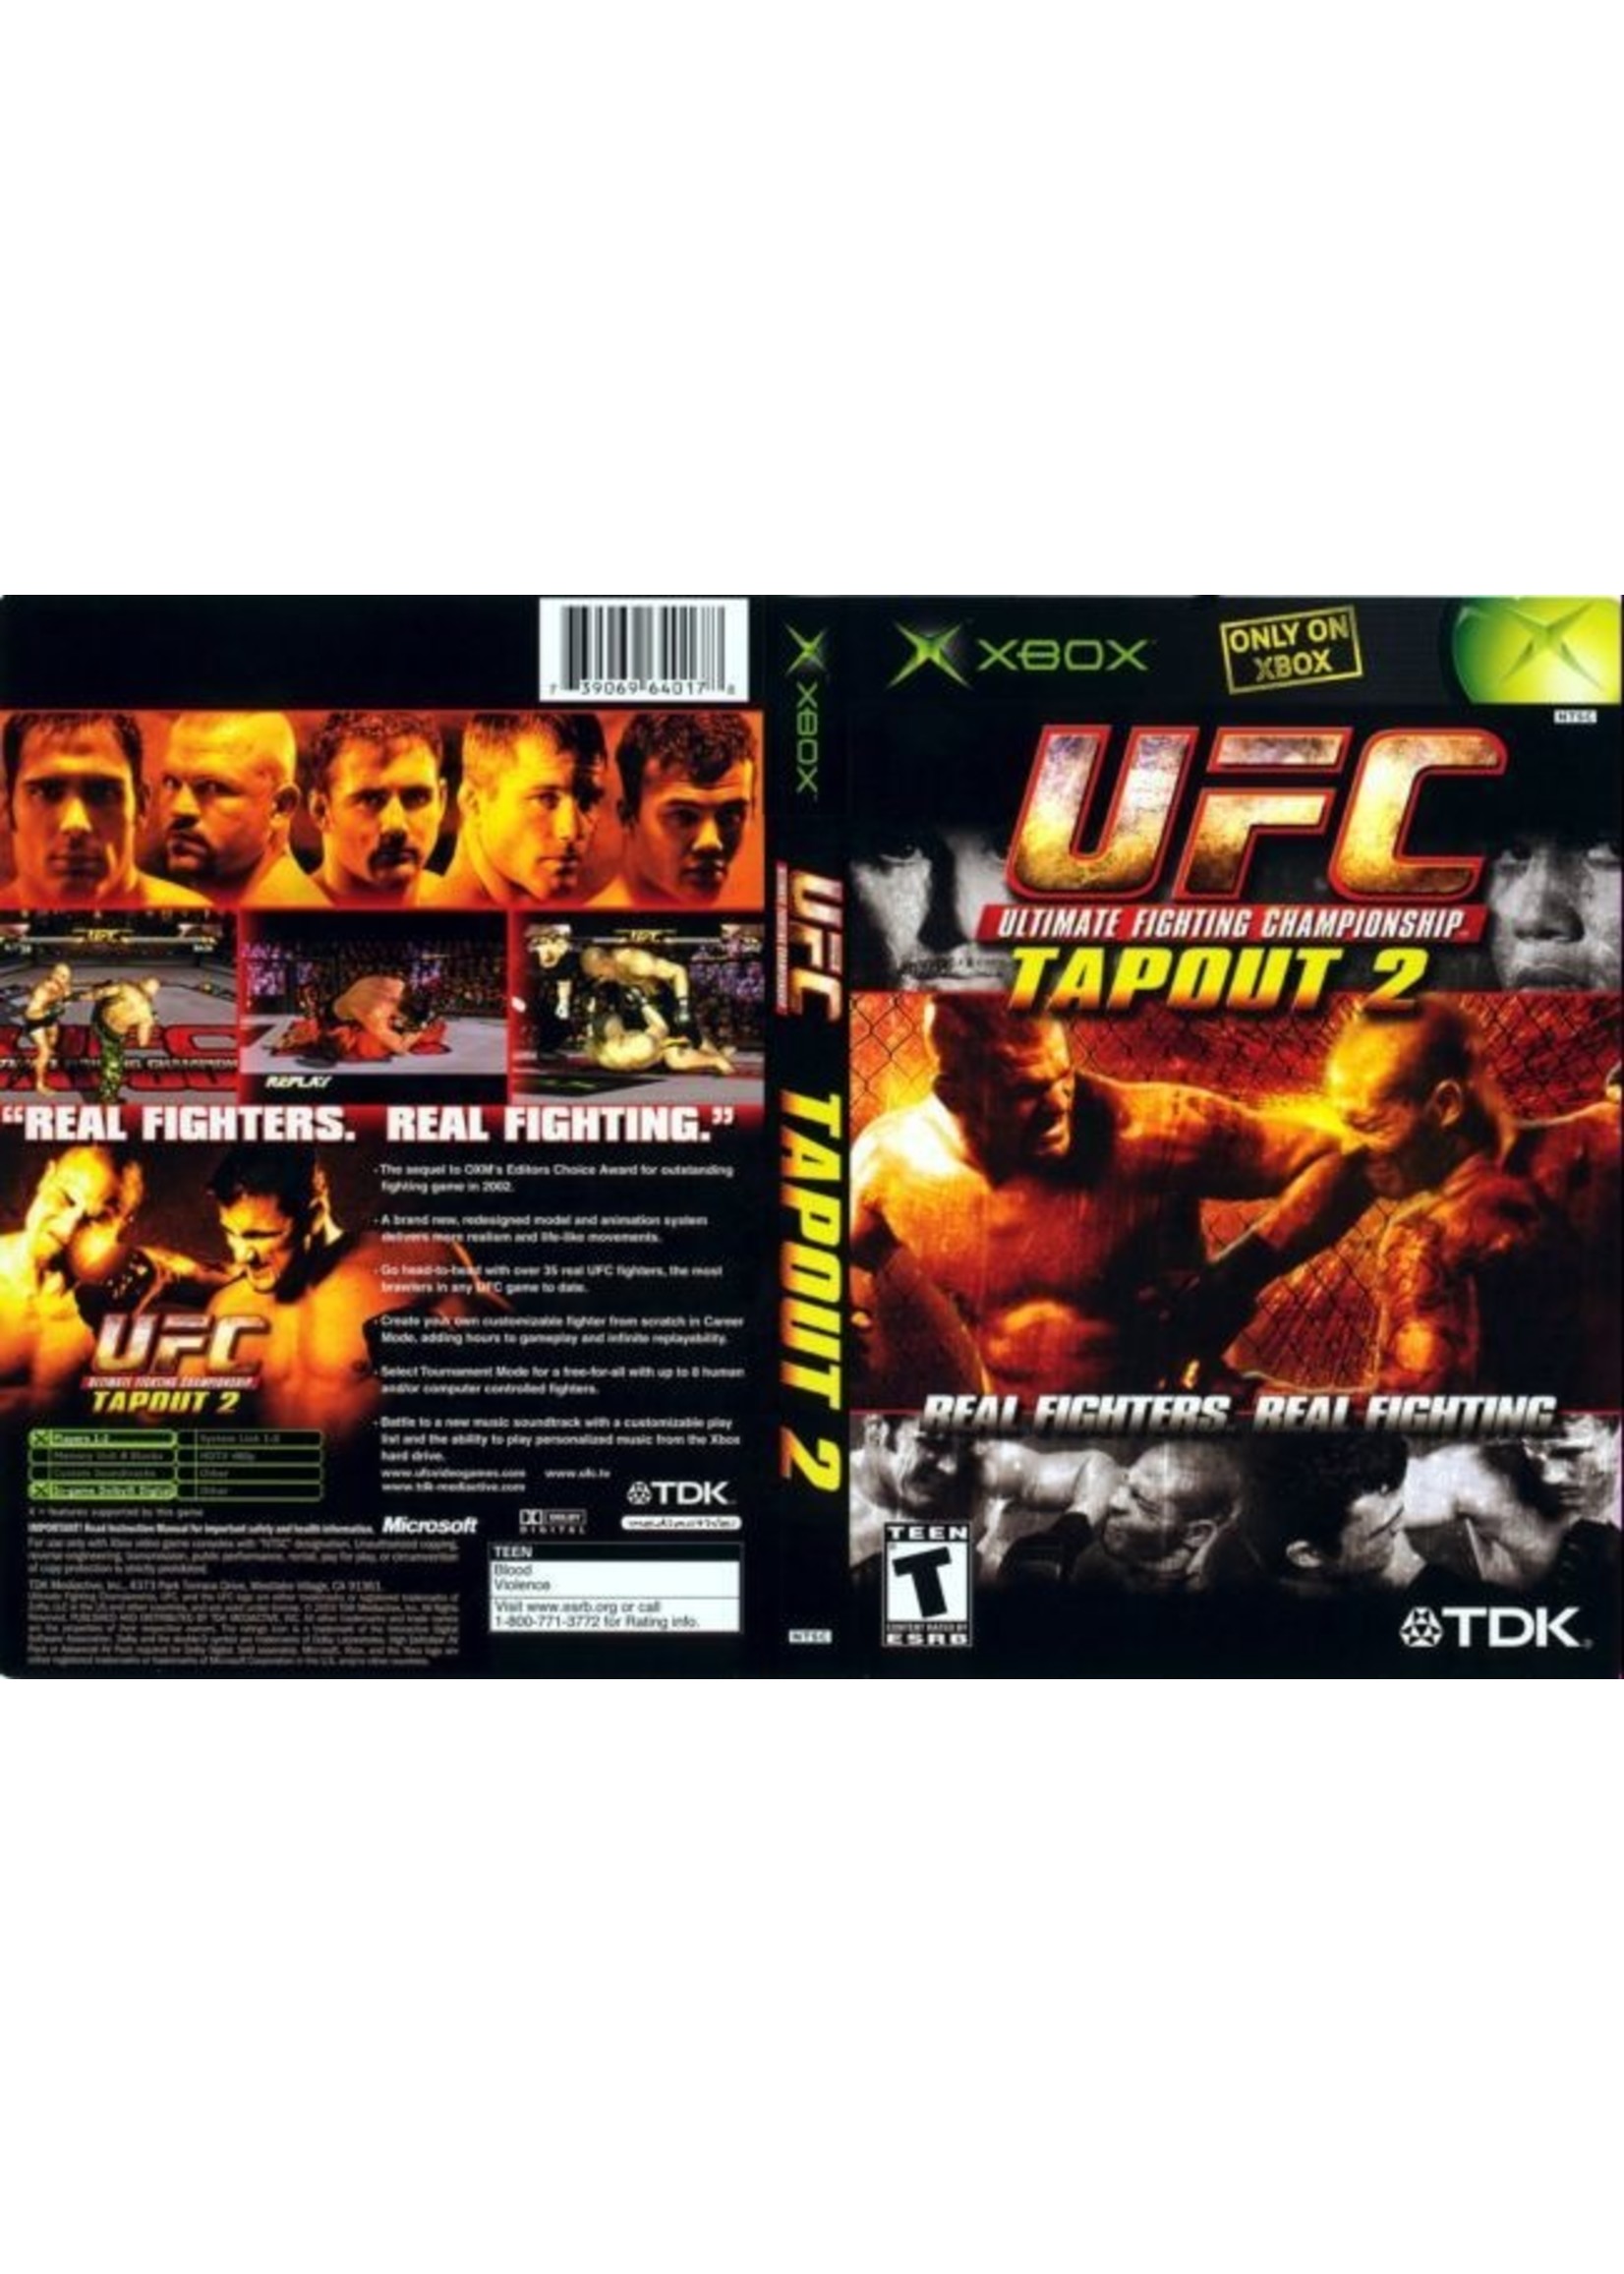 Microsoft Xbox UFC Tapout 2